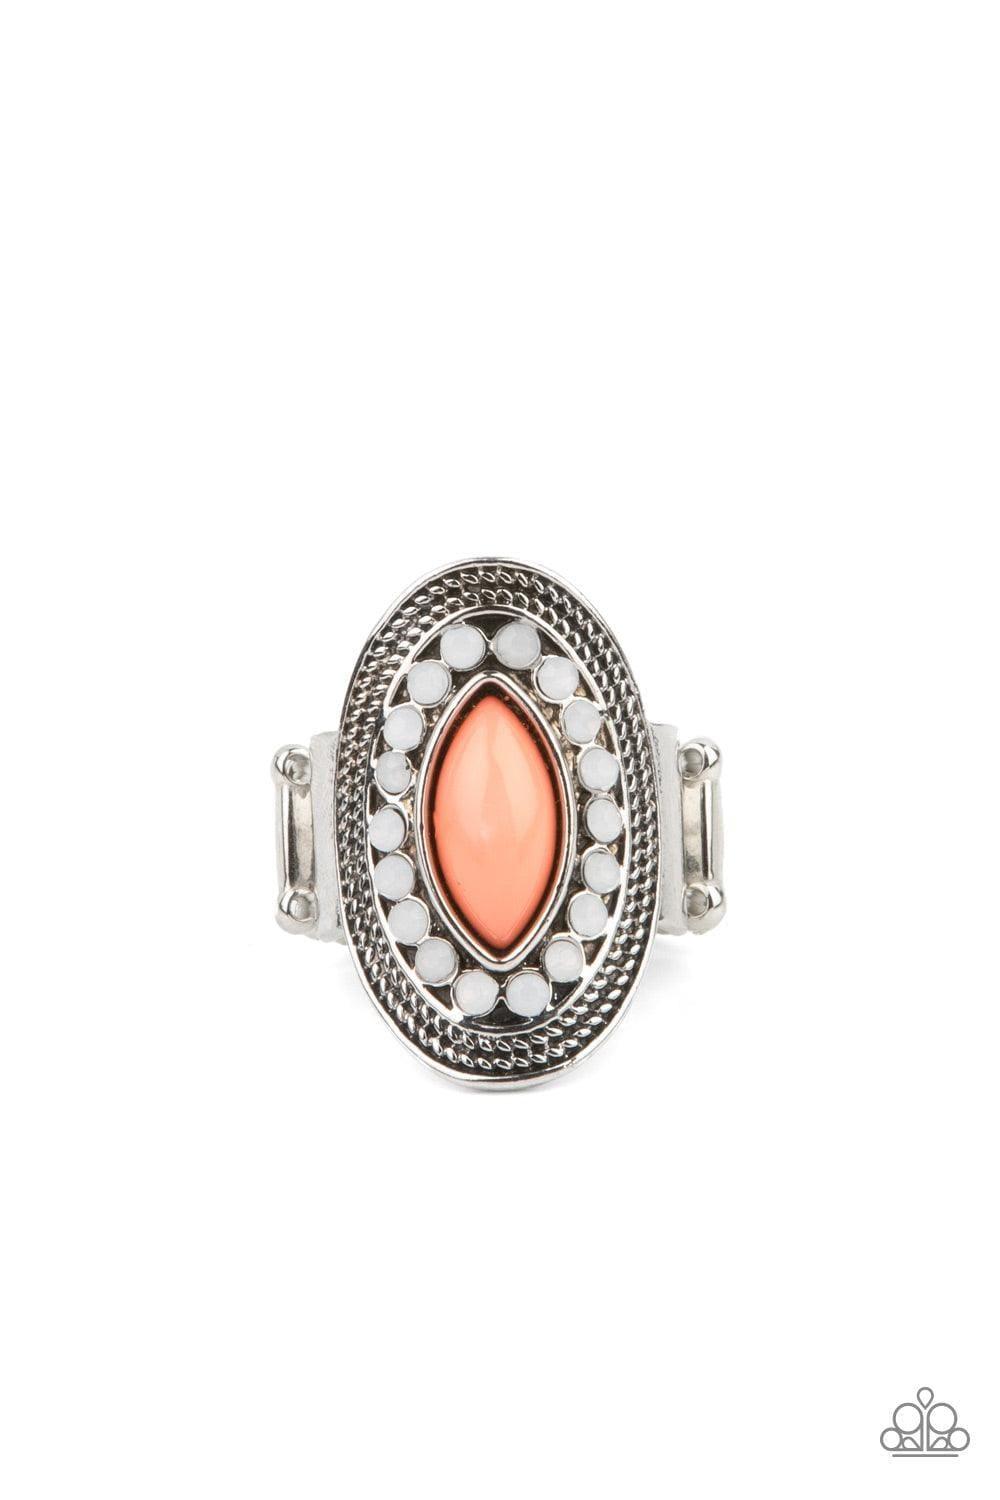 Paparazzi Accessories - Tea Light Twinkle - Orange (coral) Ring - Bling by JessieK